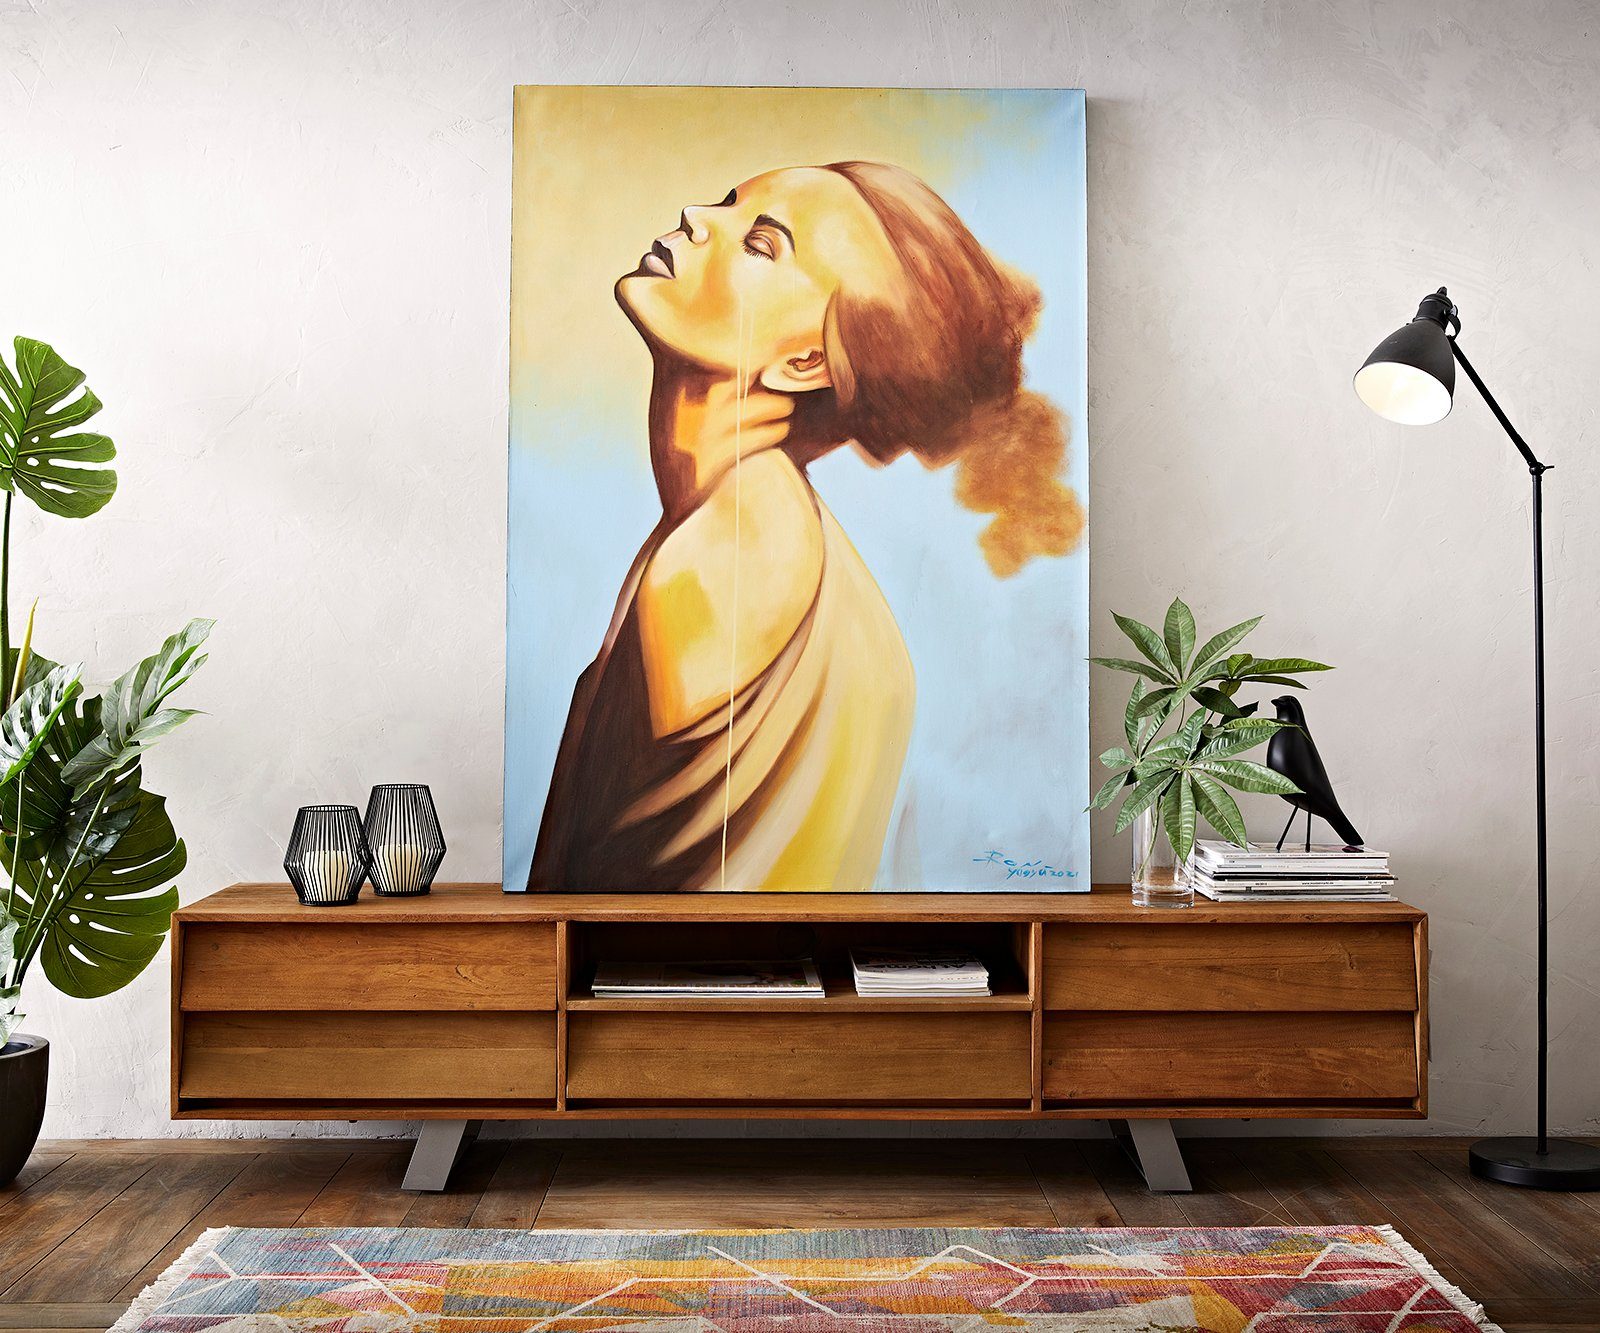 Mehrfarbig auf Young, DELIFE Acryl Leinwand 100x140 Wandbild Woman cm